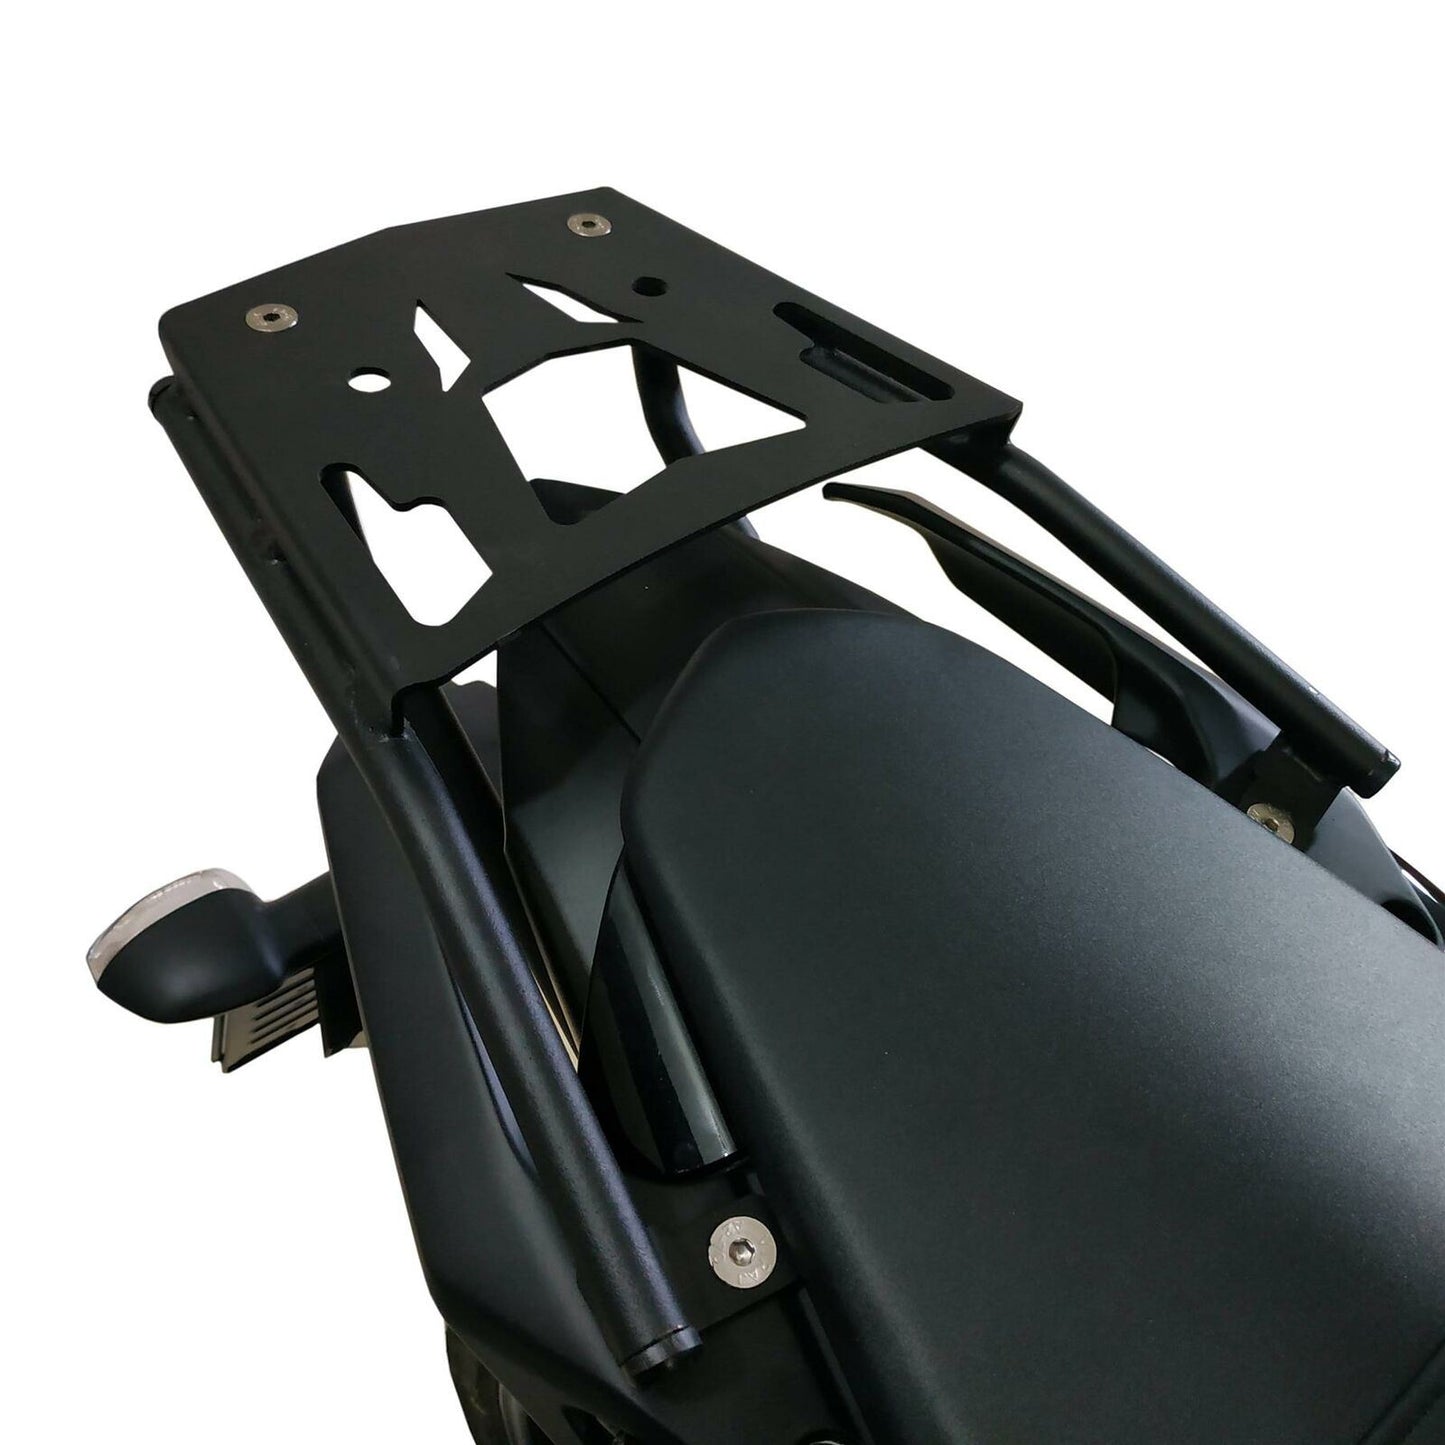 Yamaha MT03 MT25 rear rack +  46 LT top case set  2016-19 ALL IN ONE